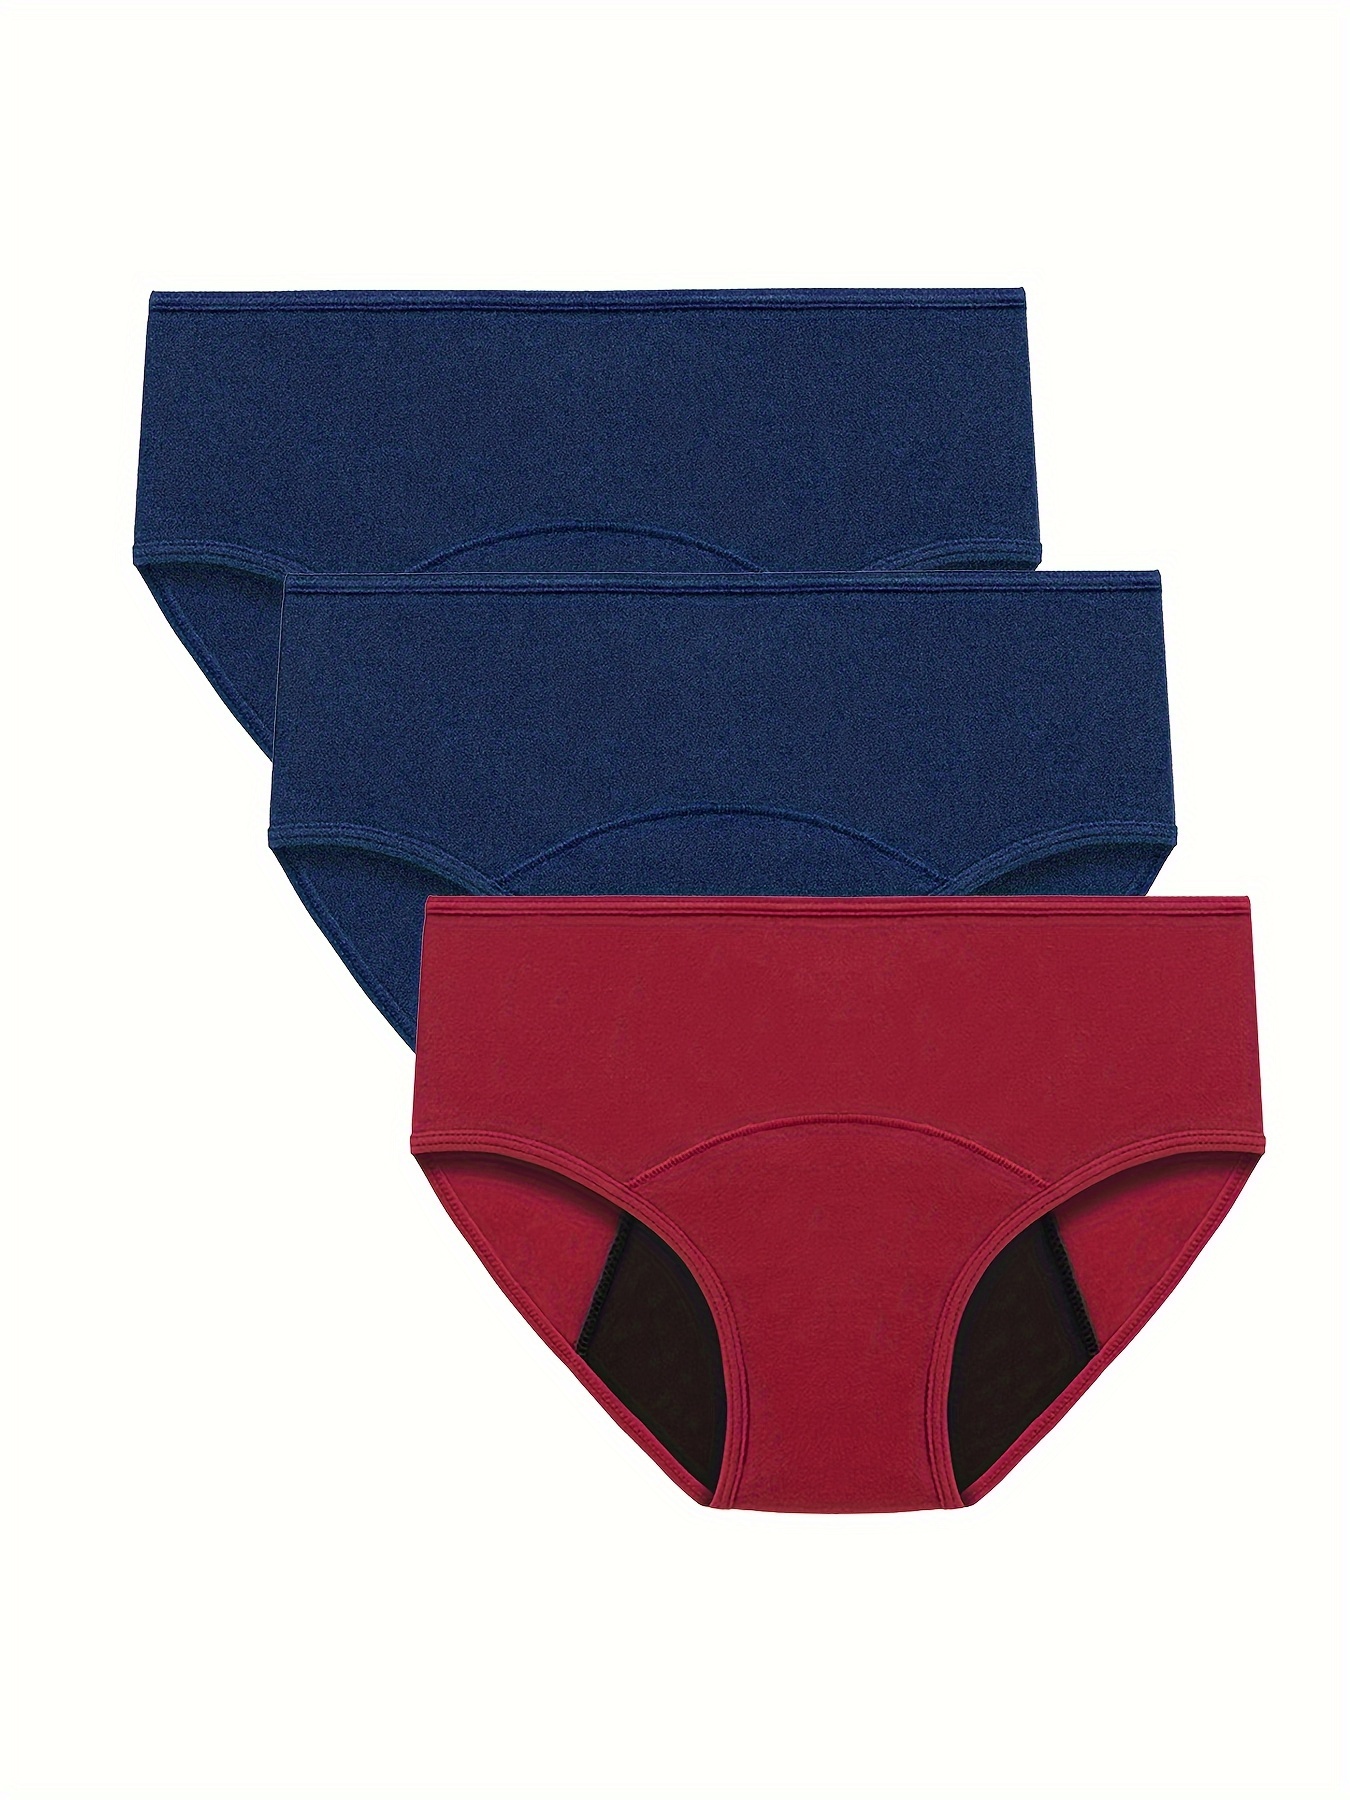 Physiological Underwear for Women 3-Piece Set Leak Proof Plus Size Soft  Cotton Waterproof Briefs Fem